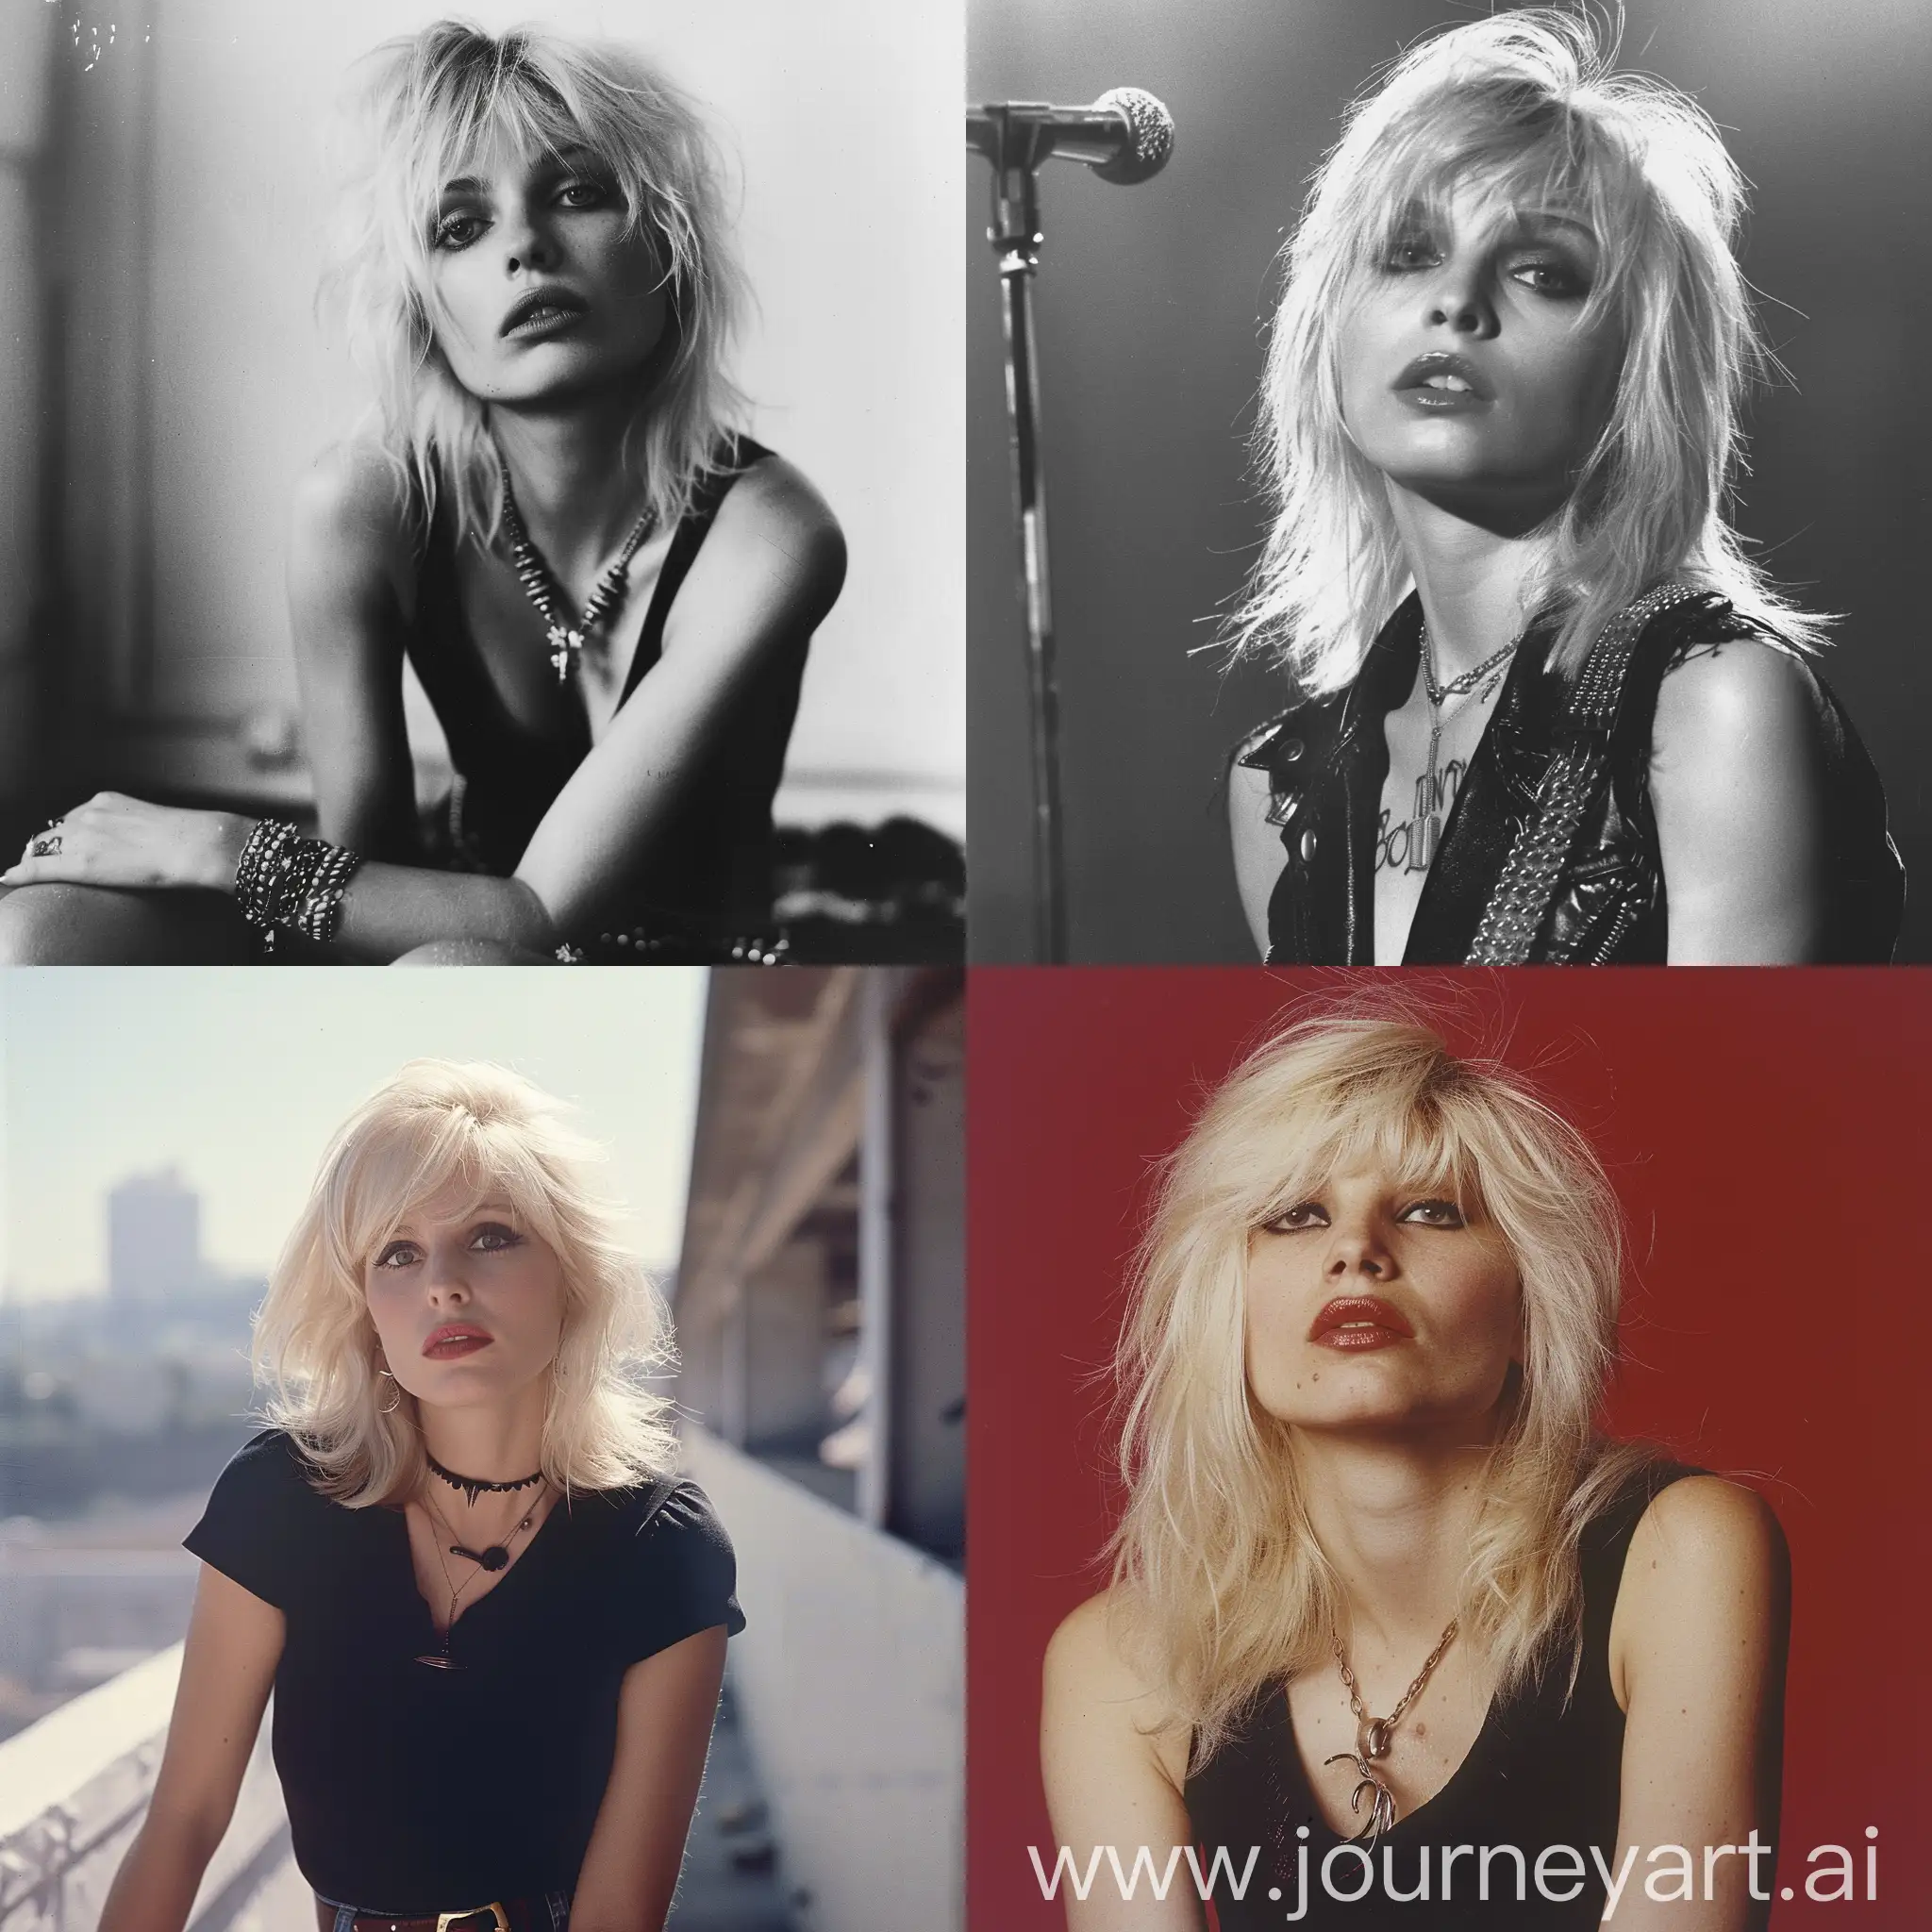 Debbie-Harry-Portrait-Iconic-Lead-Singer-of-Blondie-in-Vibrant-Colors